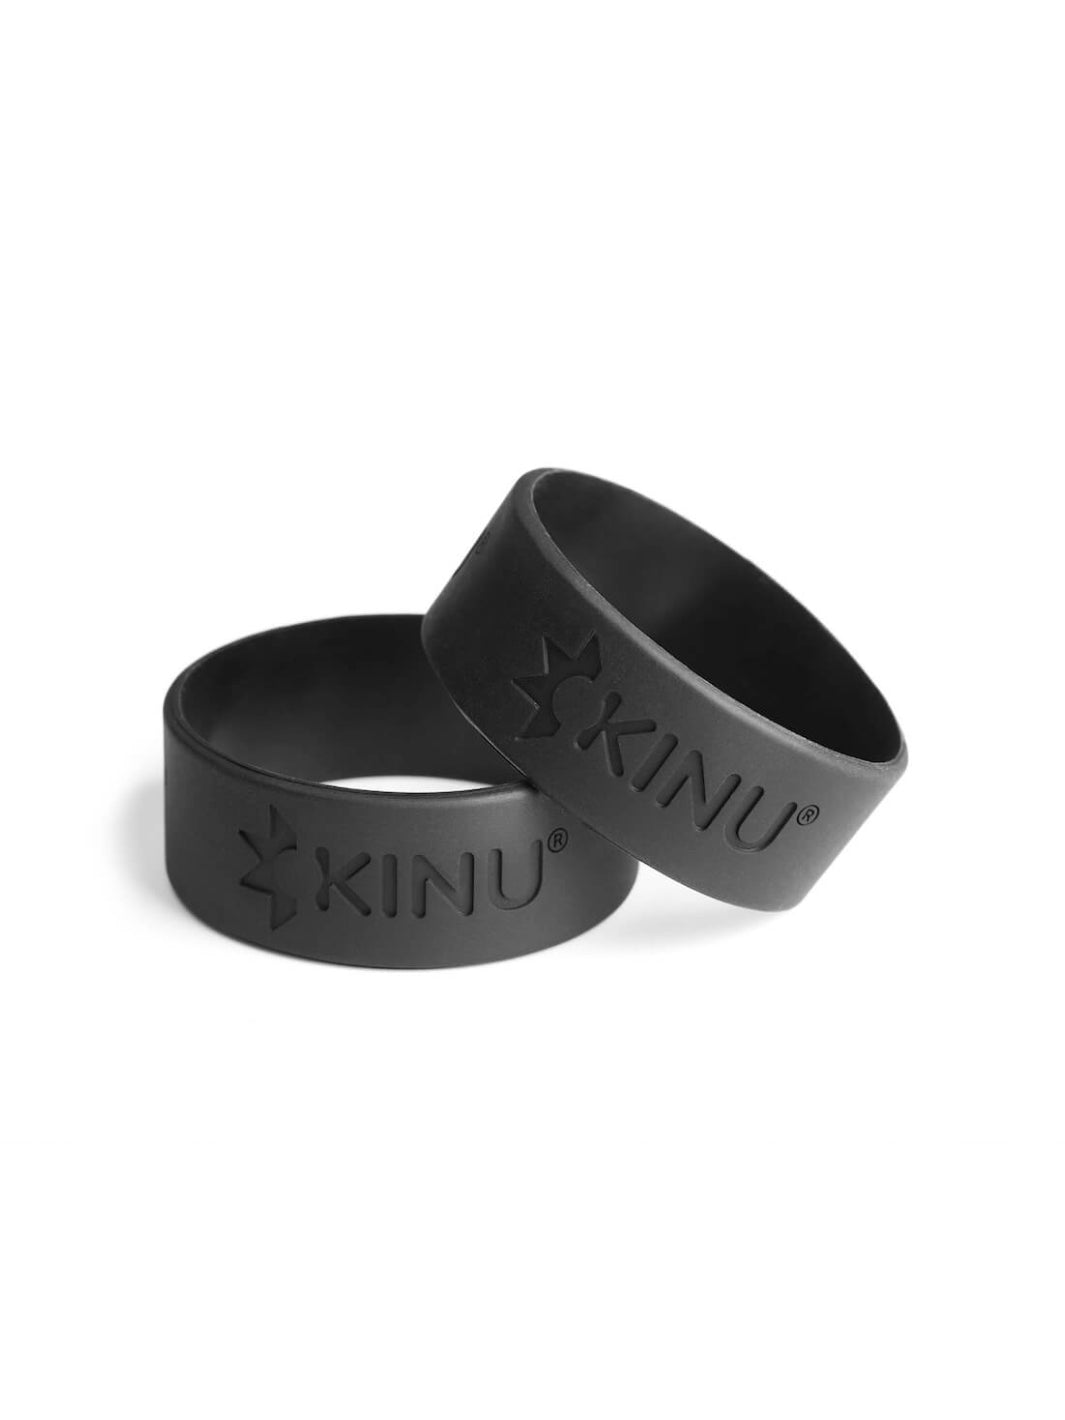 KINU Silicone Grip Bands (set of 2)